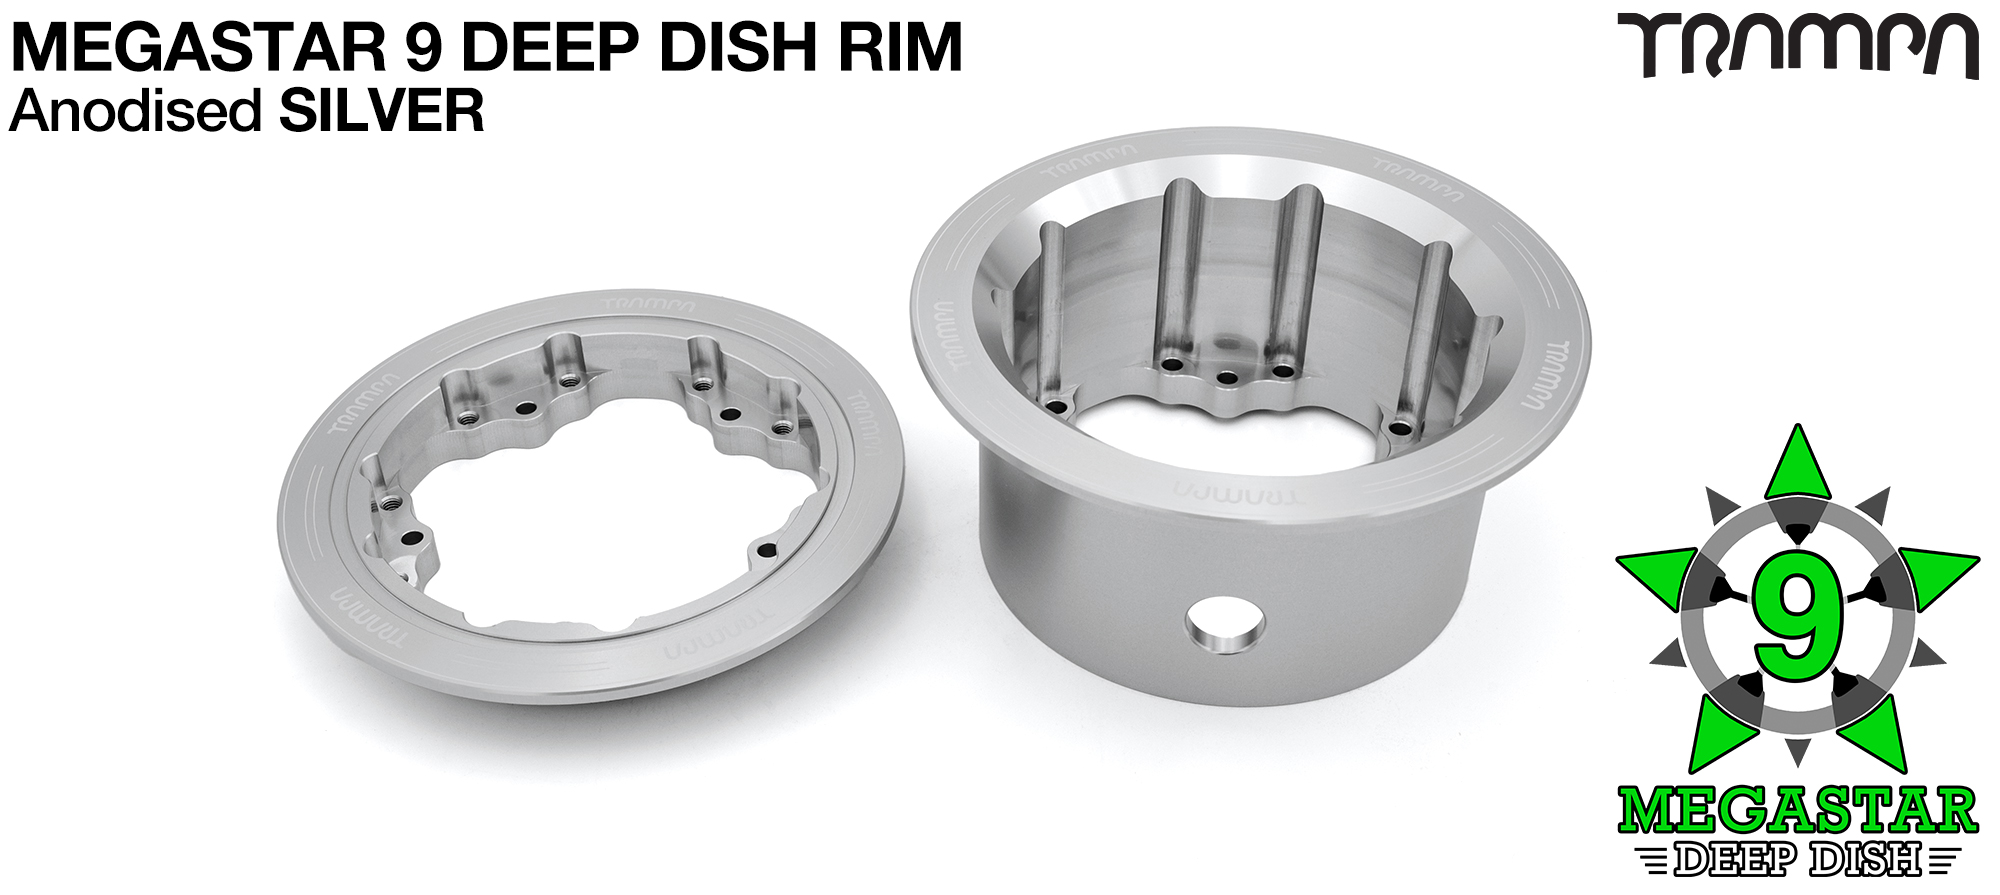 DEEP-DISH MEGASTAR 9 Rims on the REAR - SILVER